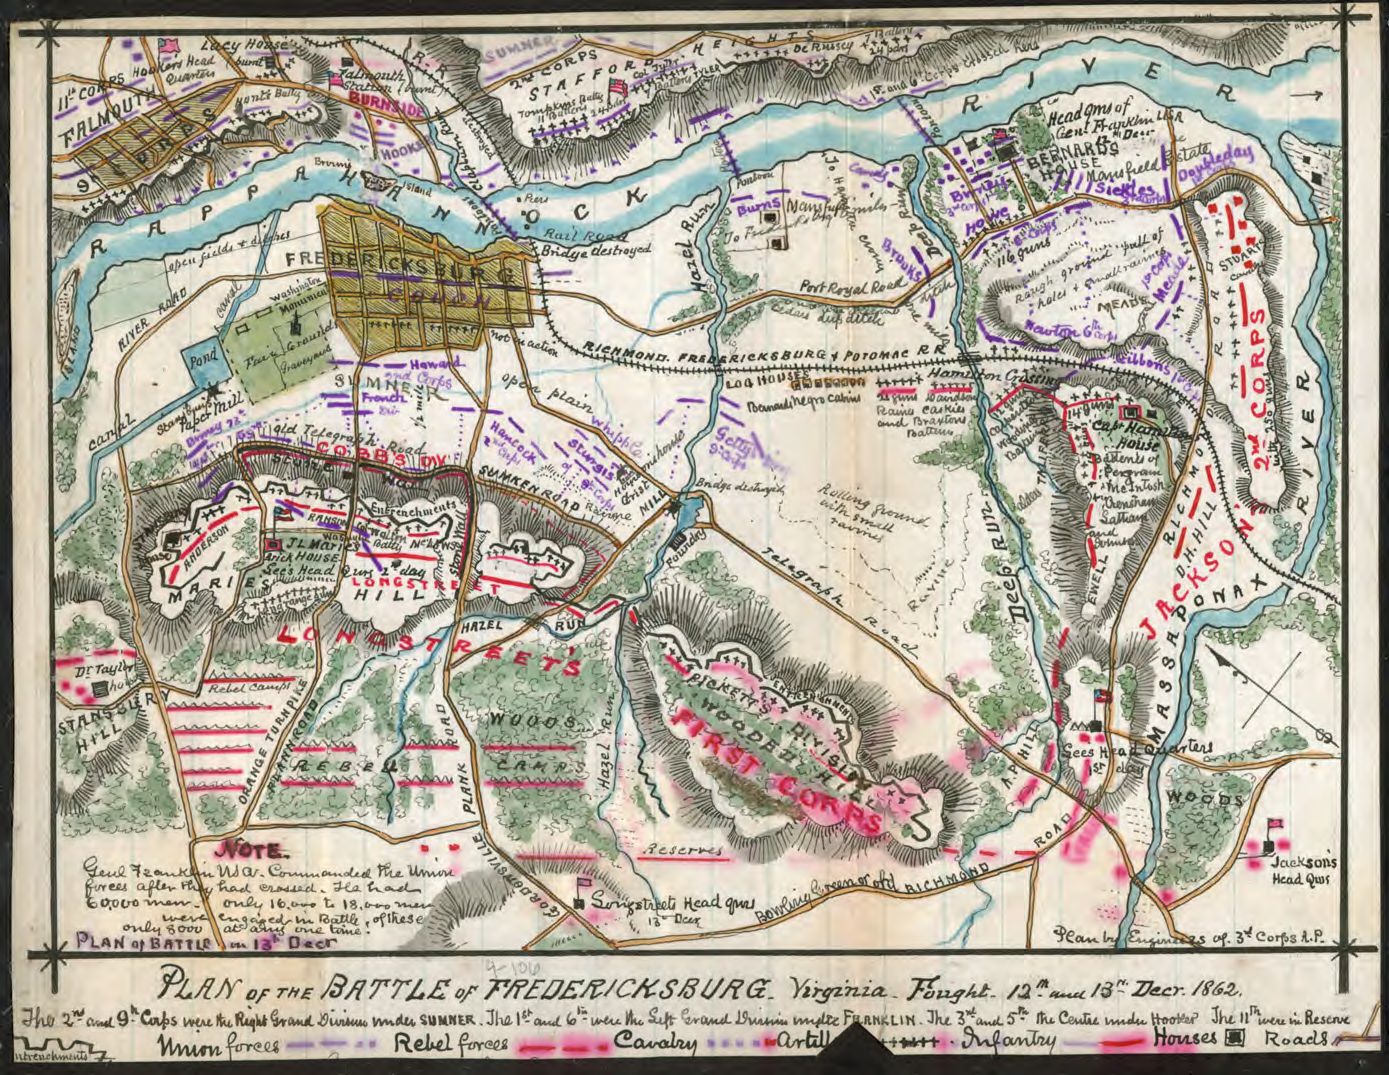 “Plan of the Battle of Fredericksburg, Virginia” by Robert Knox Sneden